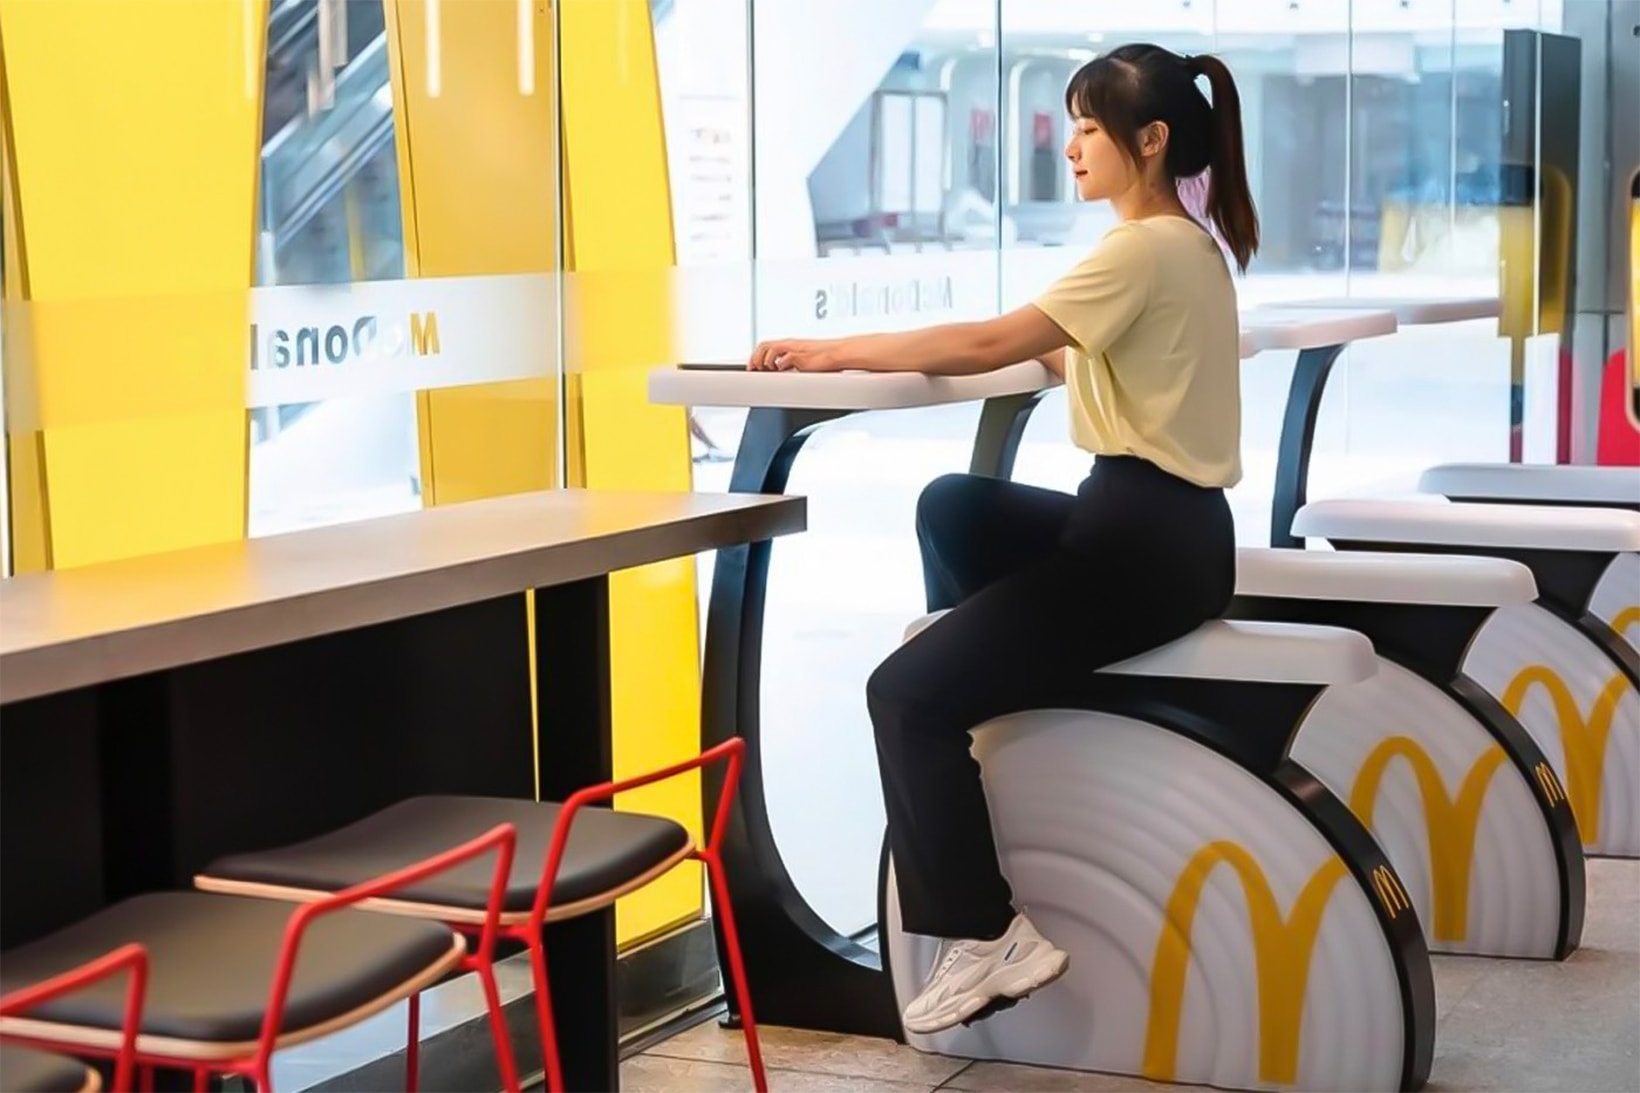 McDonald’s Exercise Bikes China Viral Video Fast Food Model Shoot